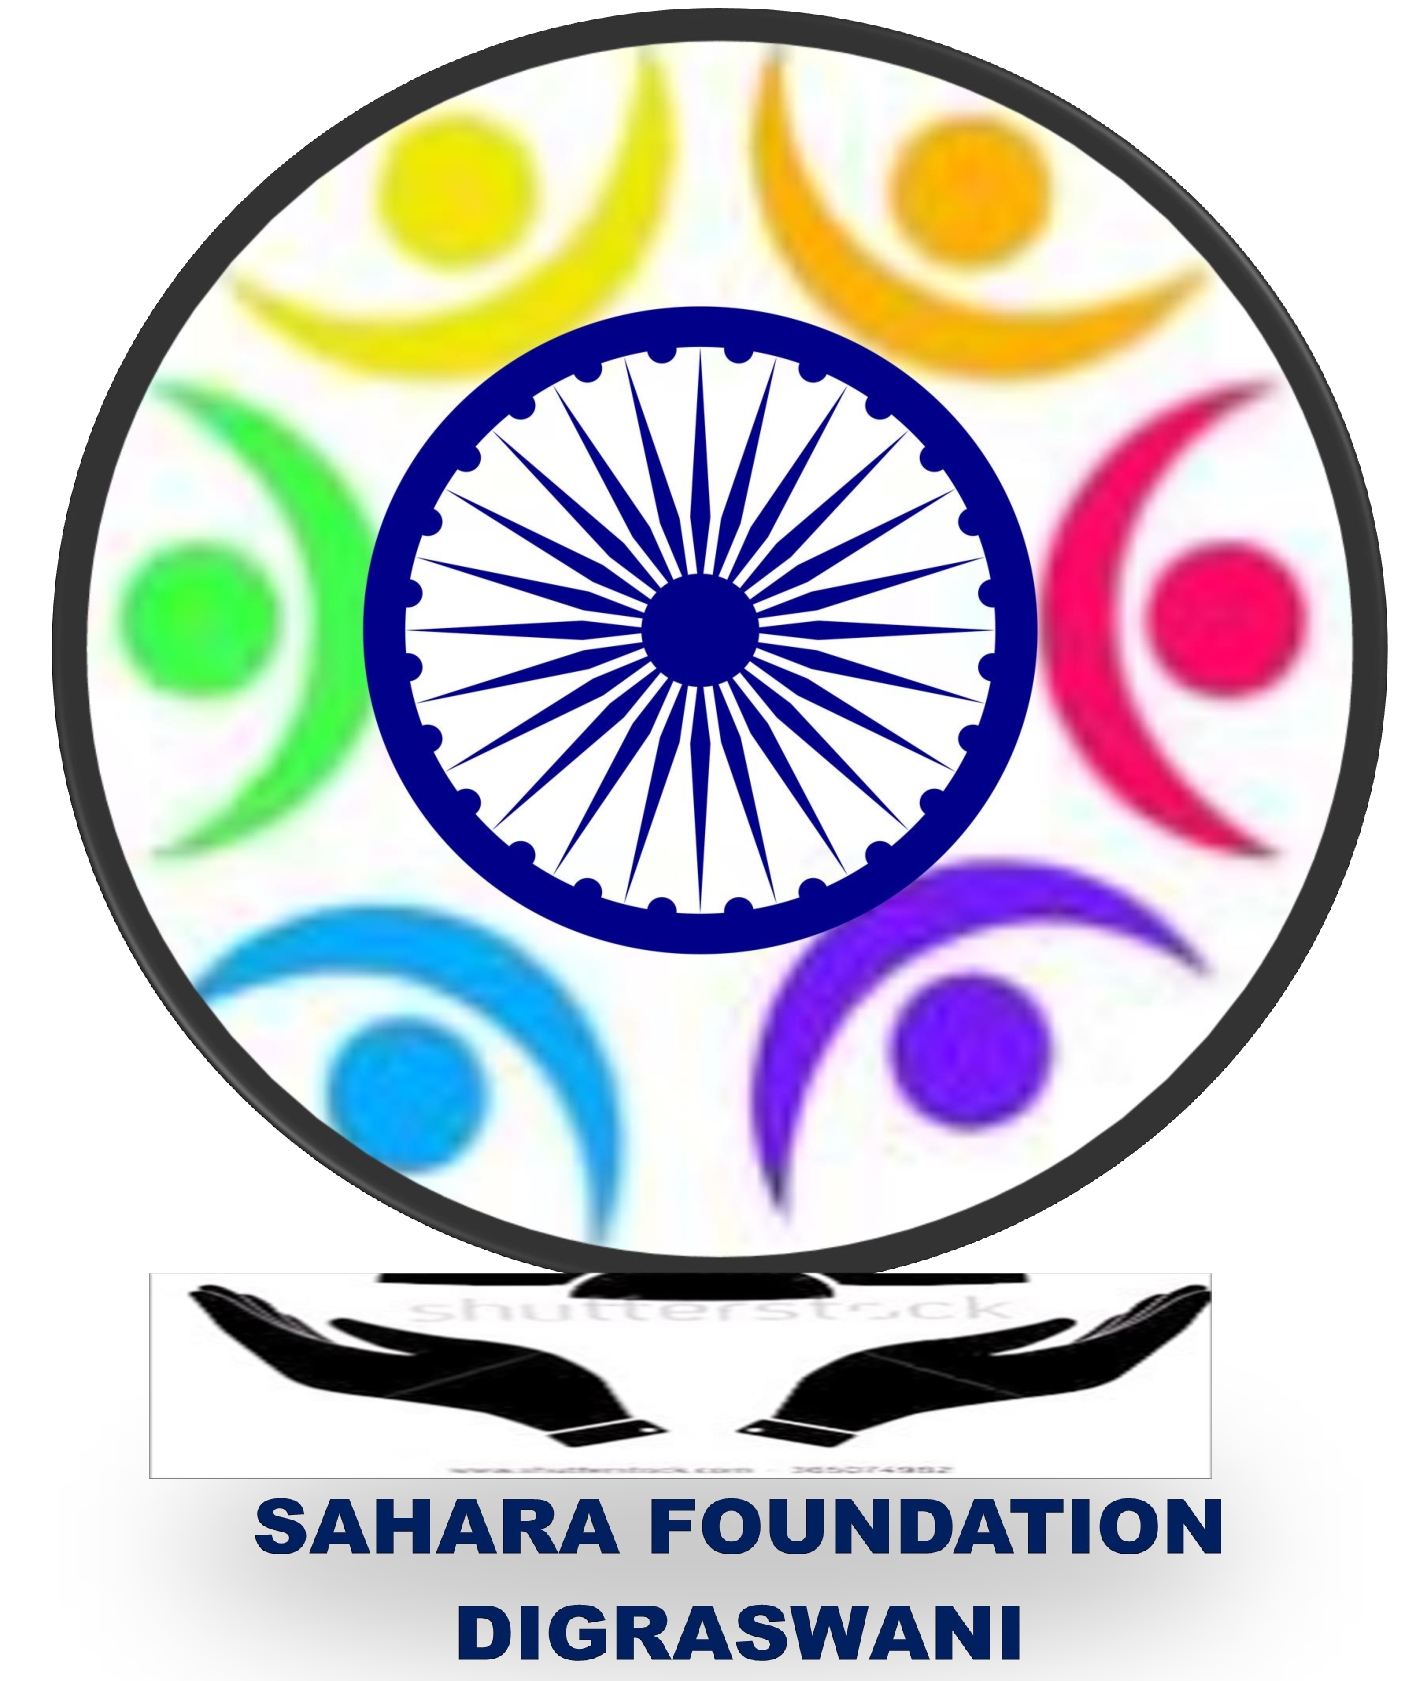 Sahara Foundation Digraswani